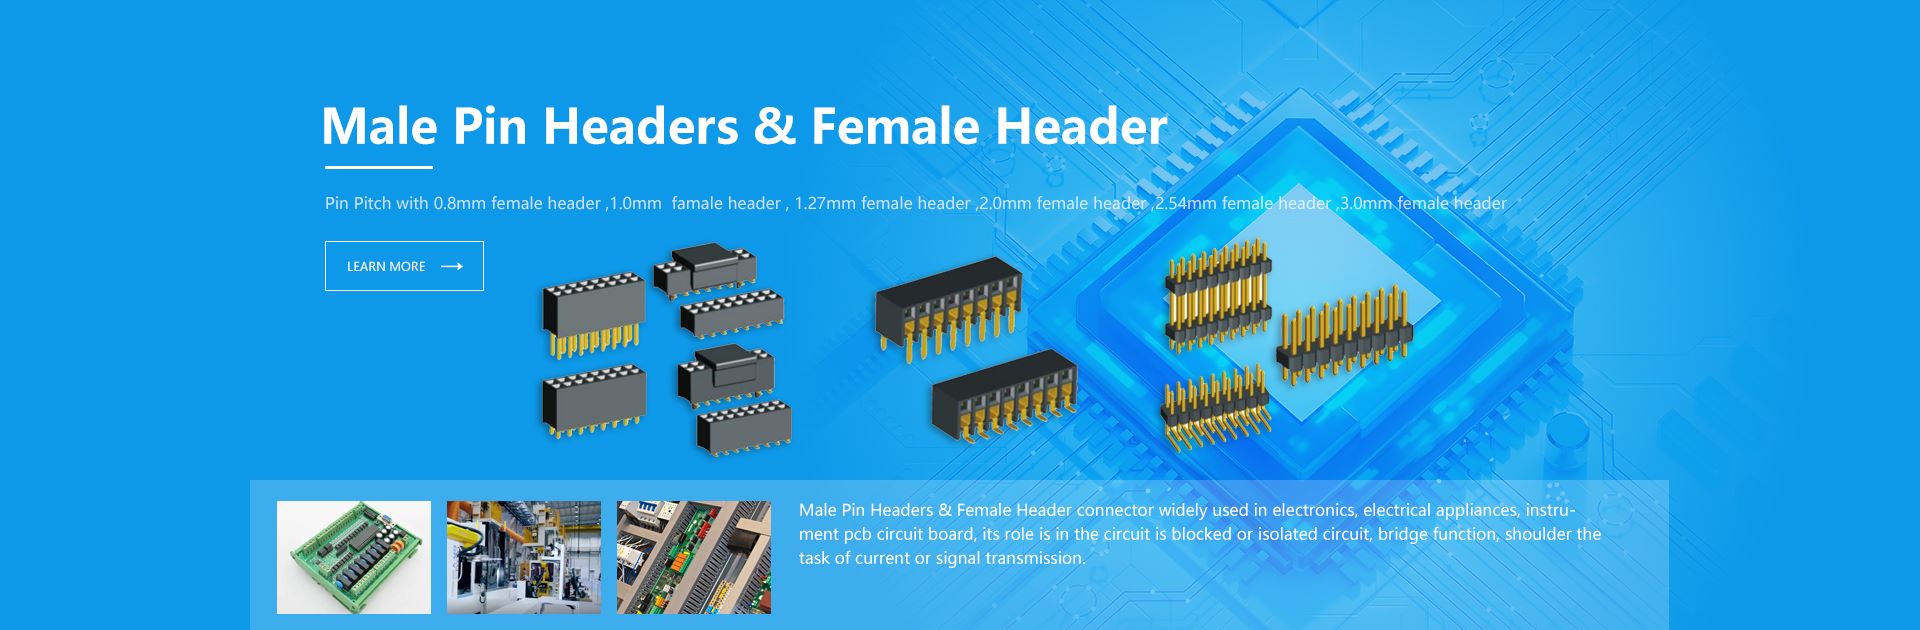 female-header-connector